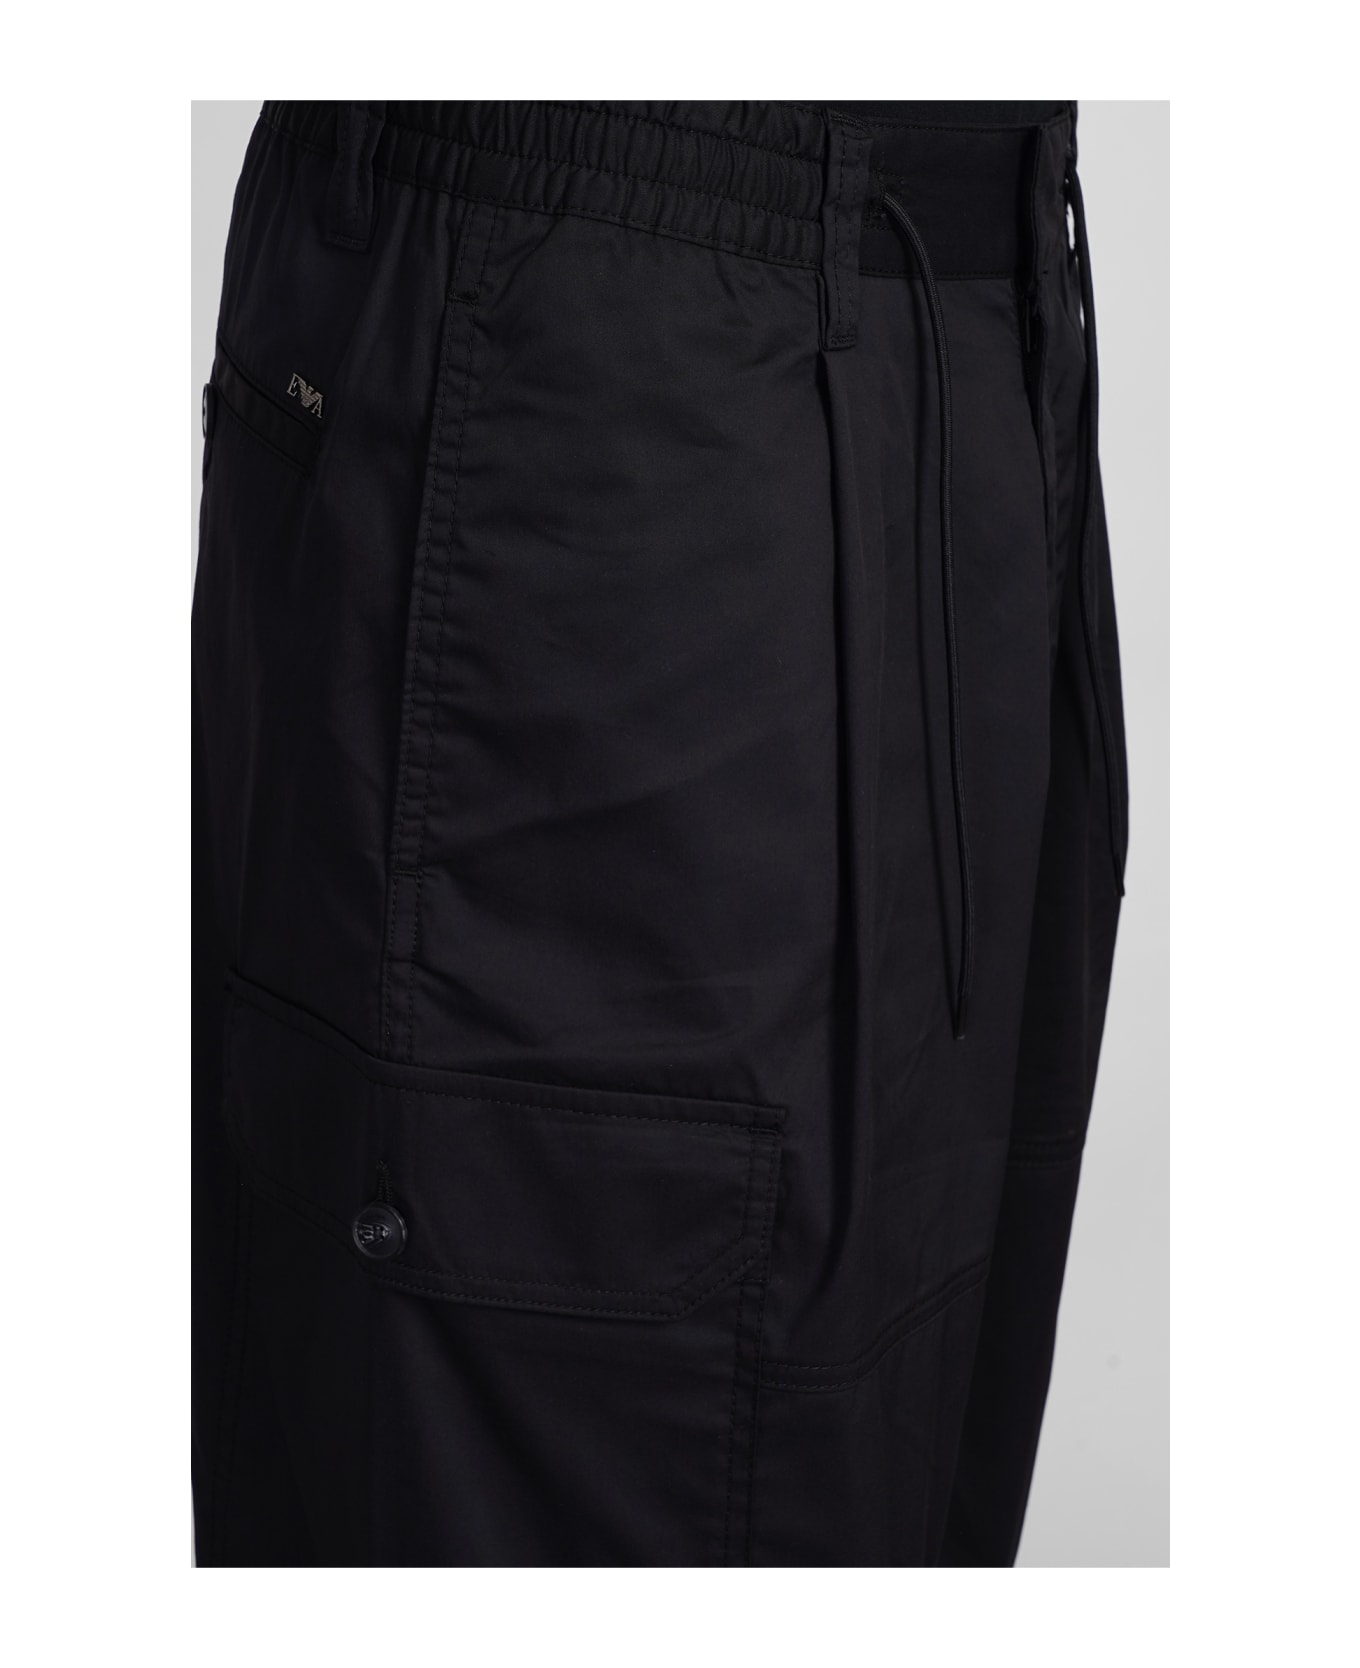 Emporio Armani Pants In Black Cotton - black